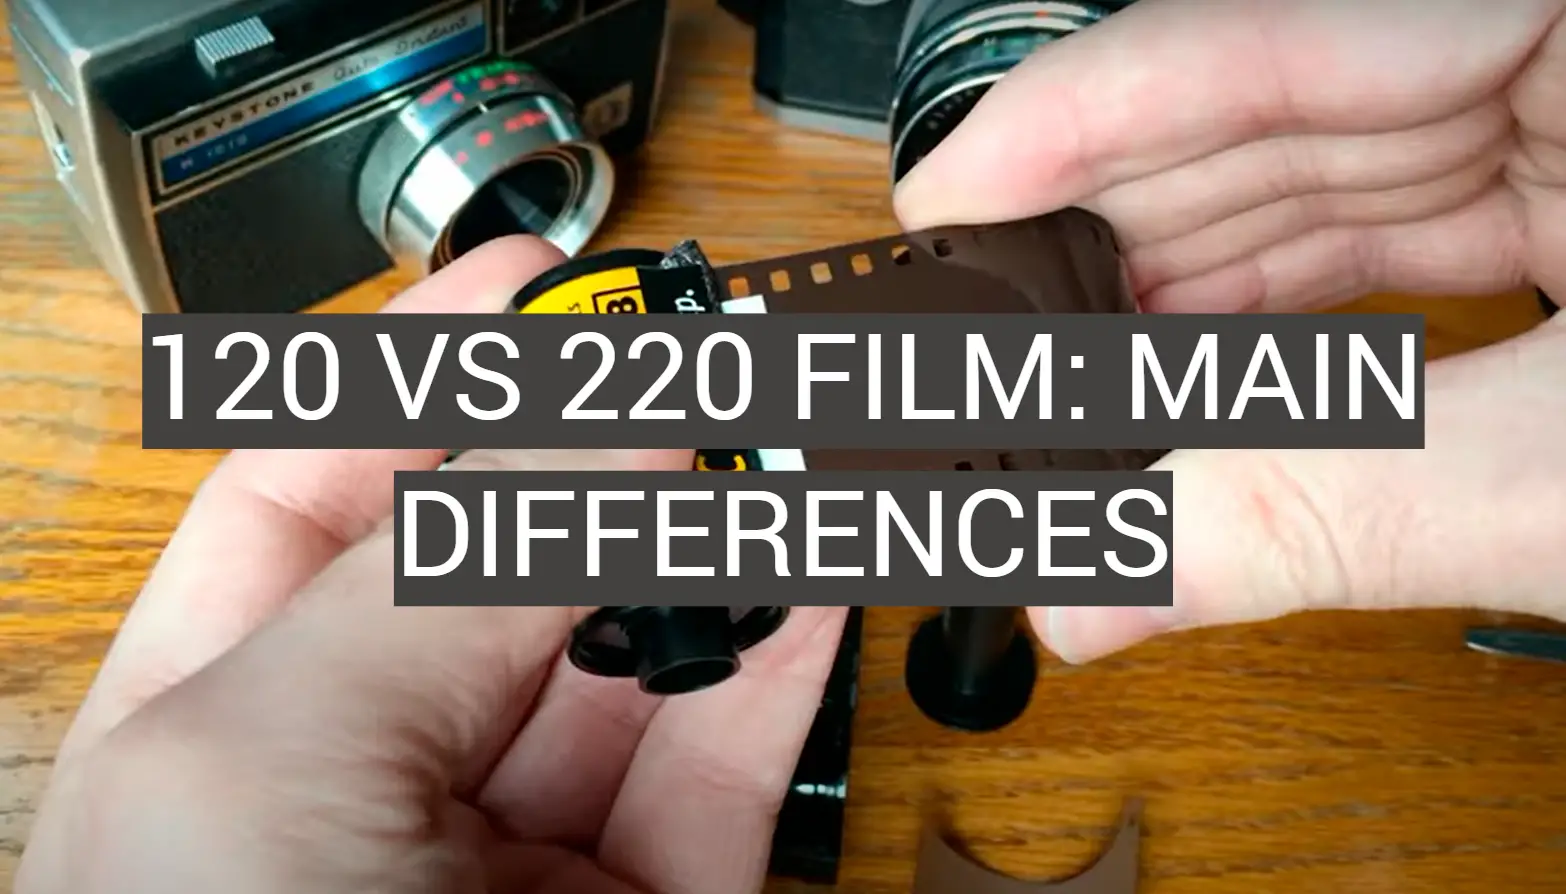 120 vs 220 Film: Main Differences